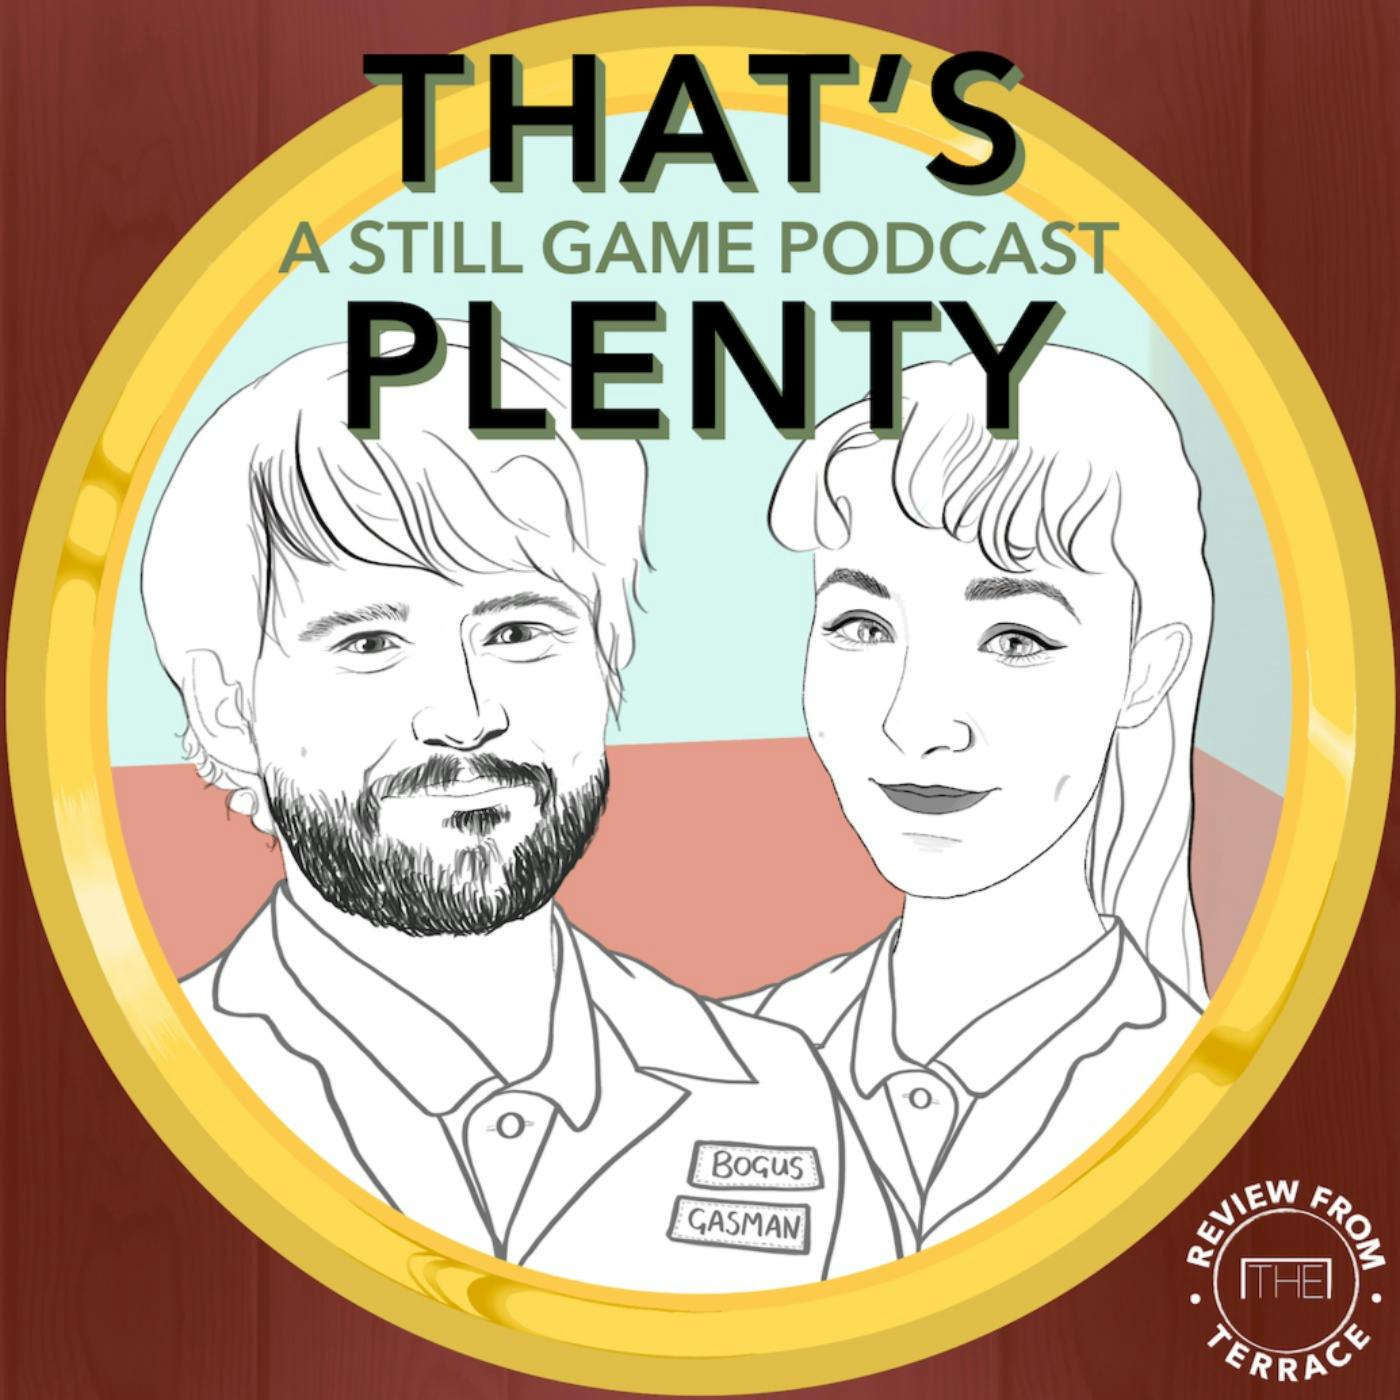 That's Plenty: A Still Game Podcast (episode 1: Pilot)